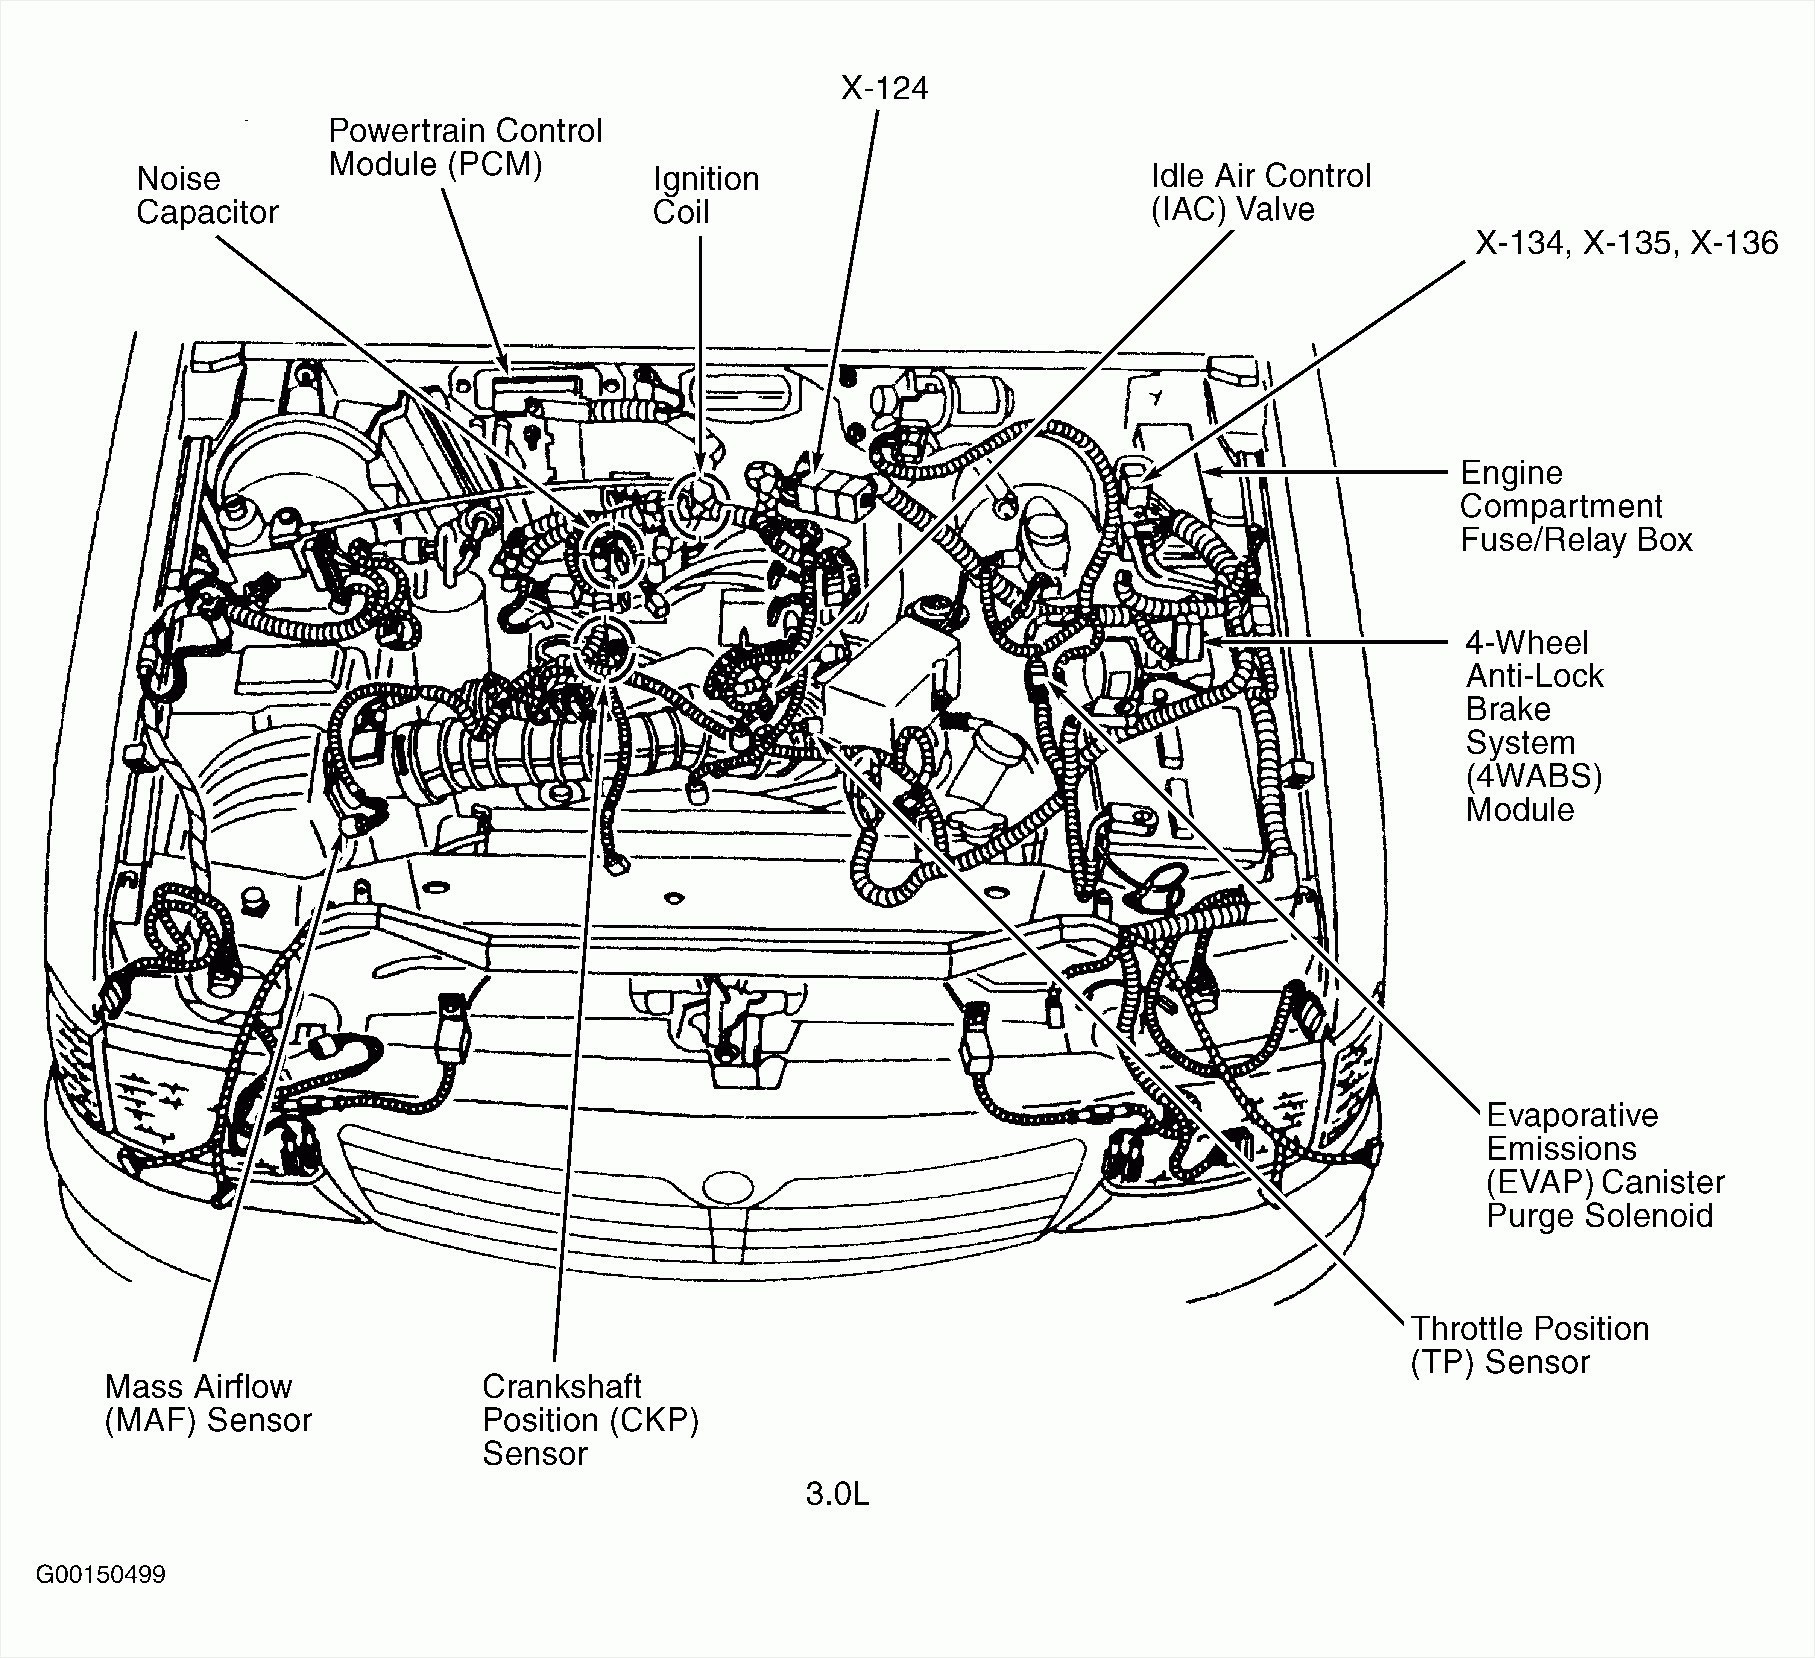 1994 ford Ranger Engine Diagram 2000 ford Taurus 3 0 Vacuum Diagram Wiring Diagram Options